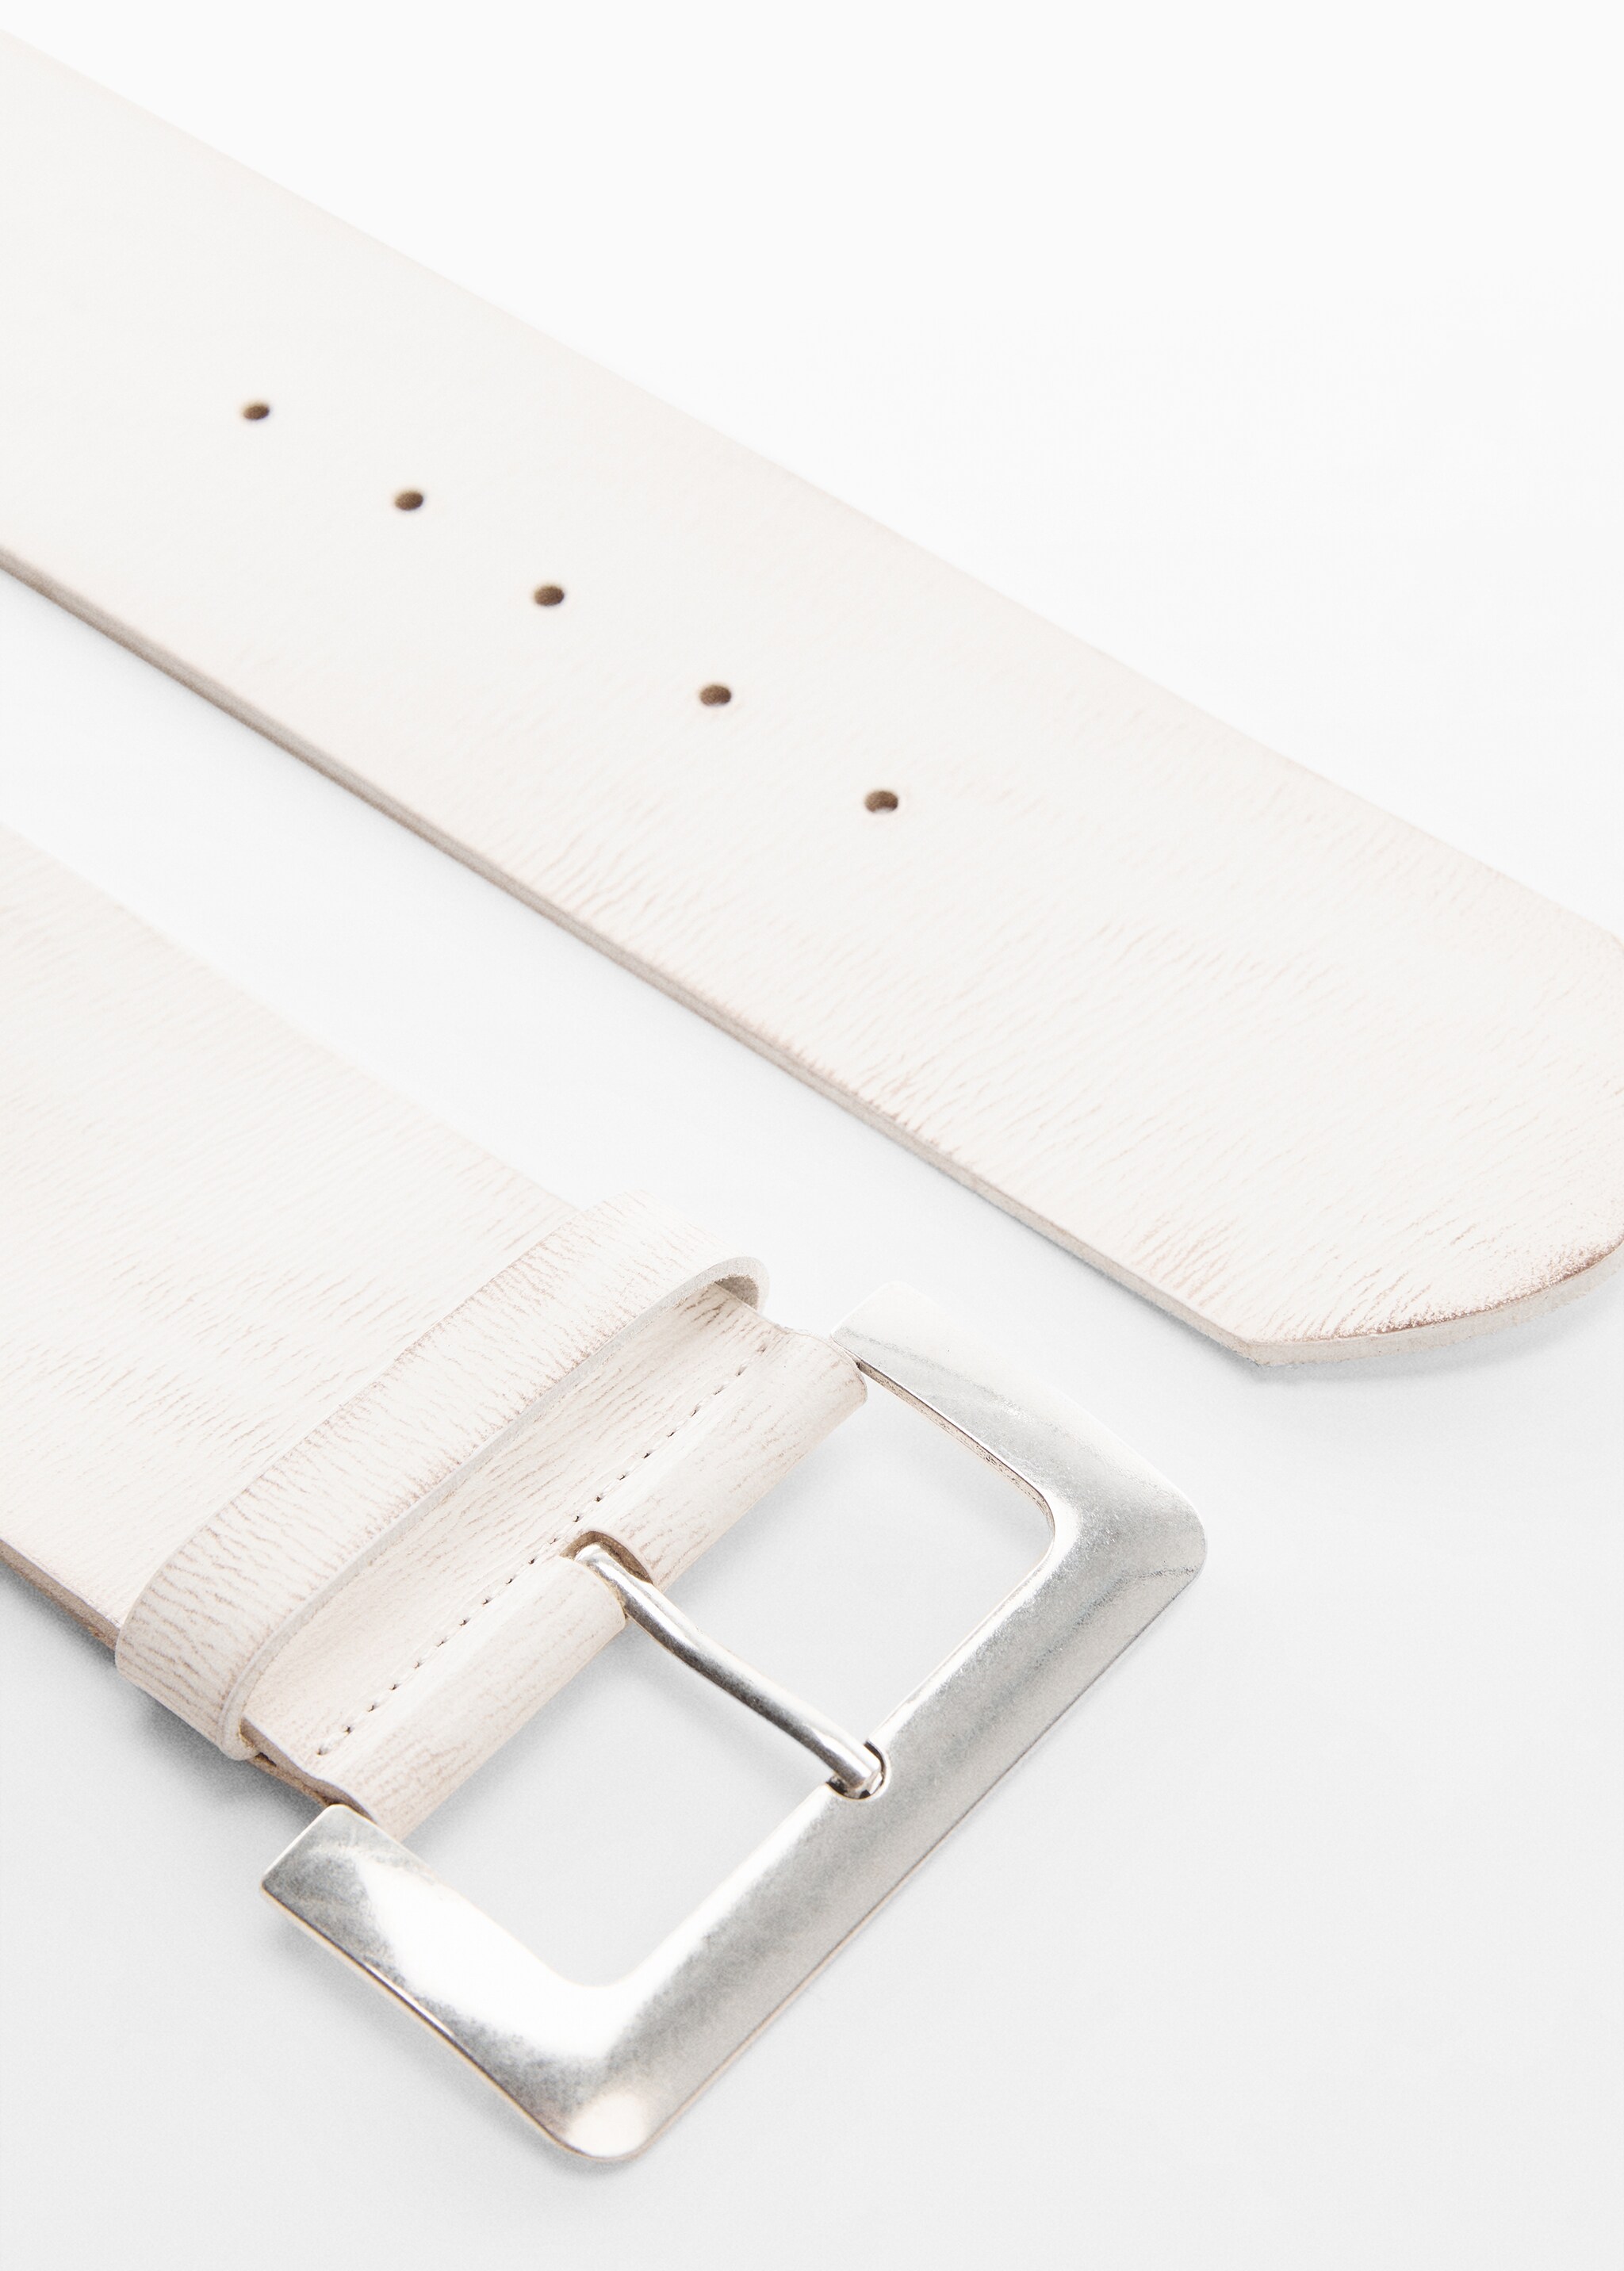 Wide leather belt - Medium plane